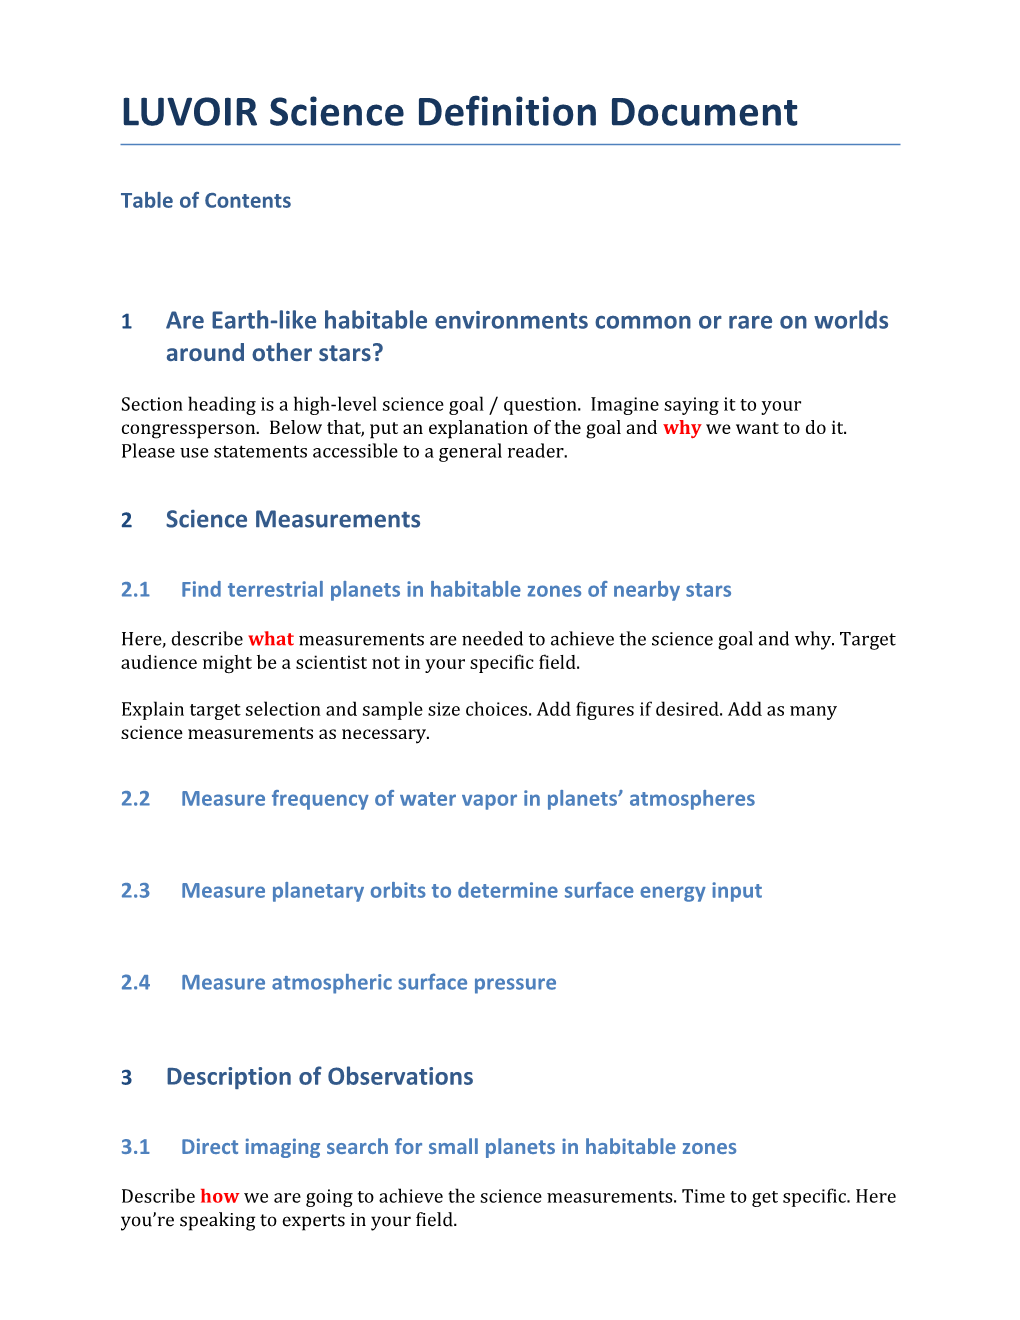 LUVOIR Science Definition Document: Habitable Exoplanets